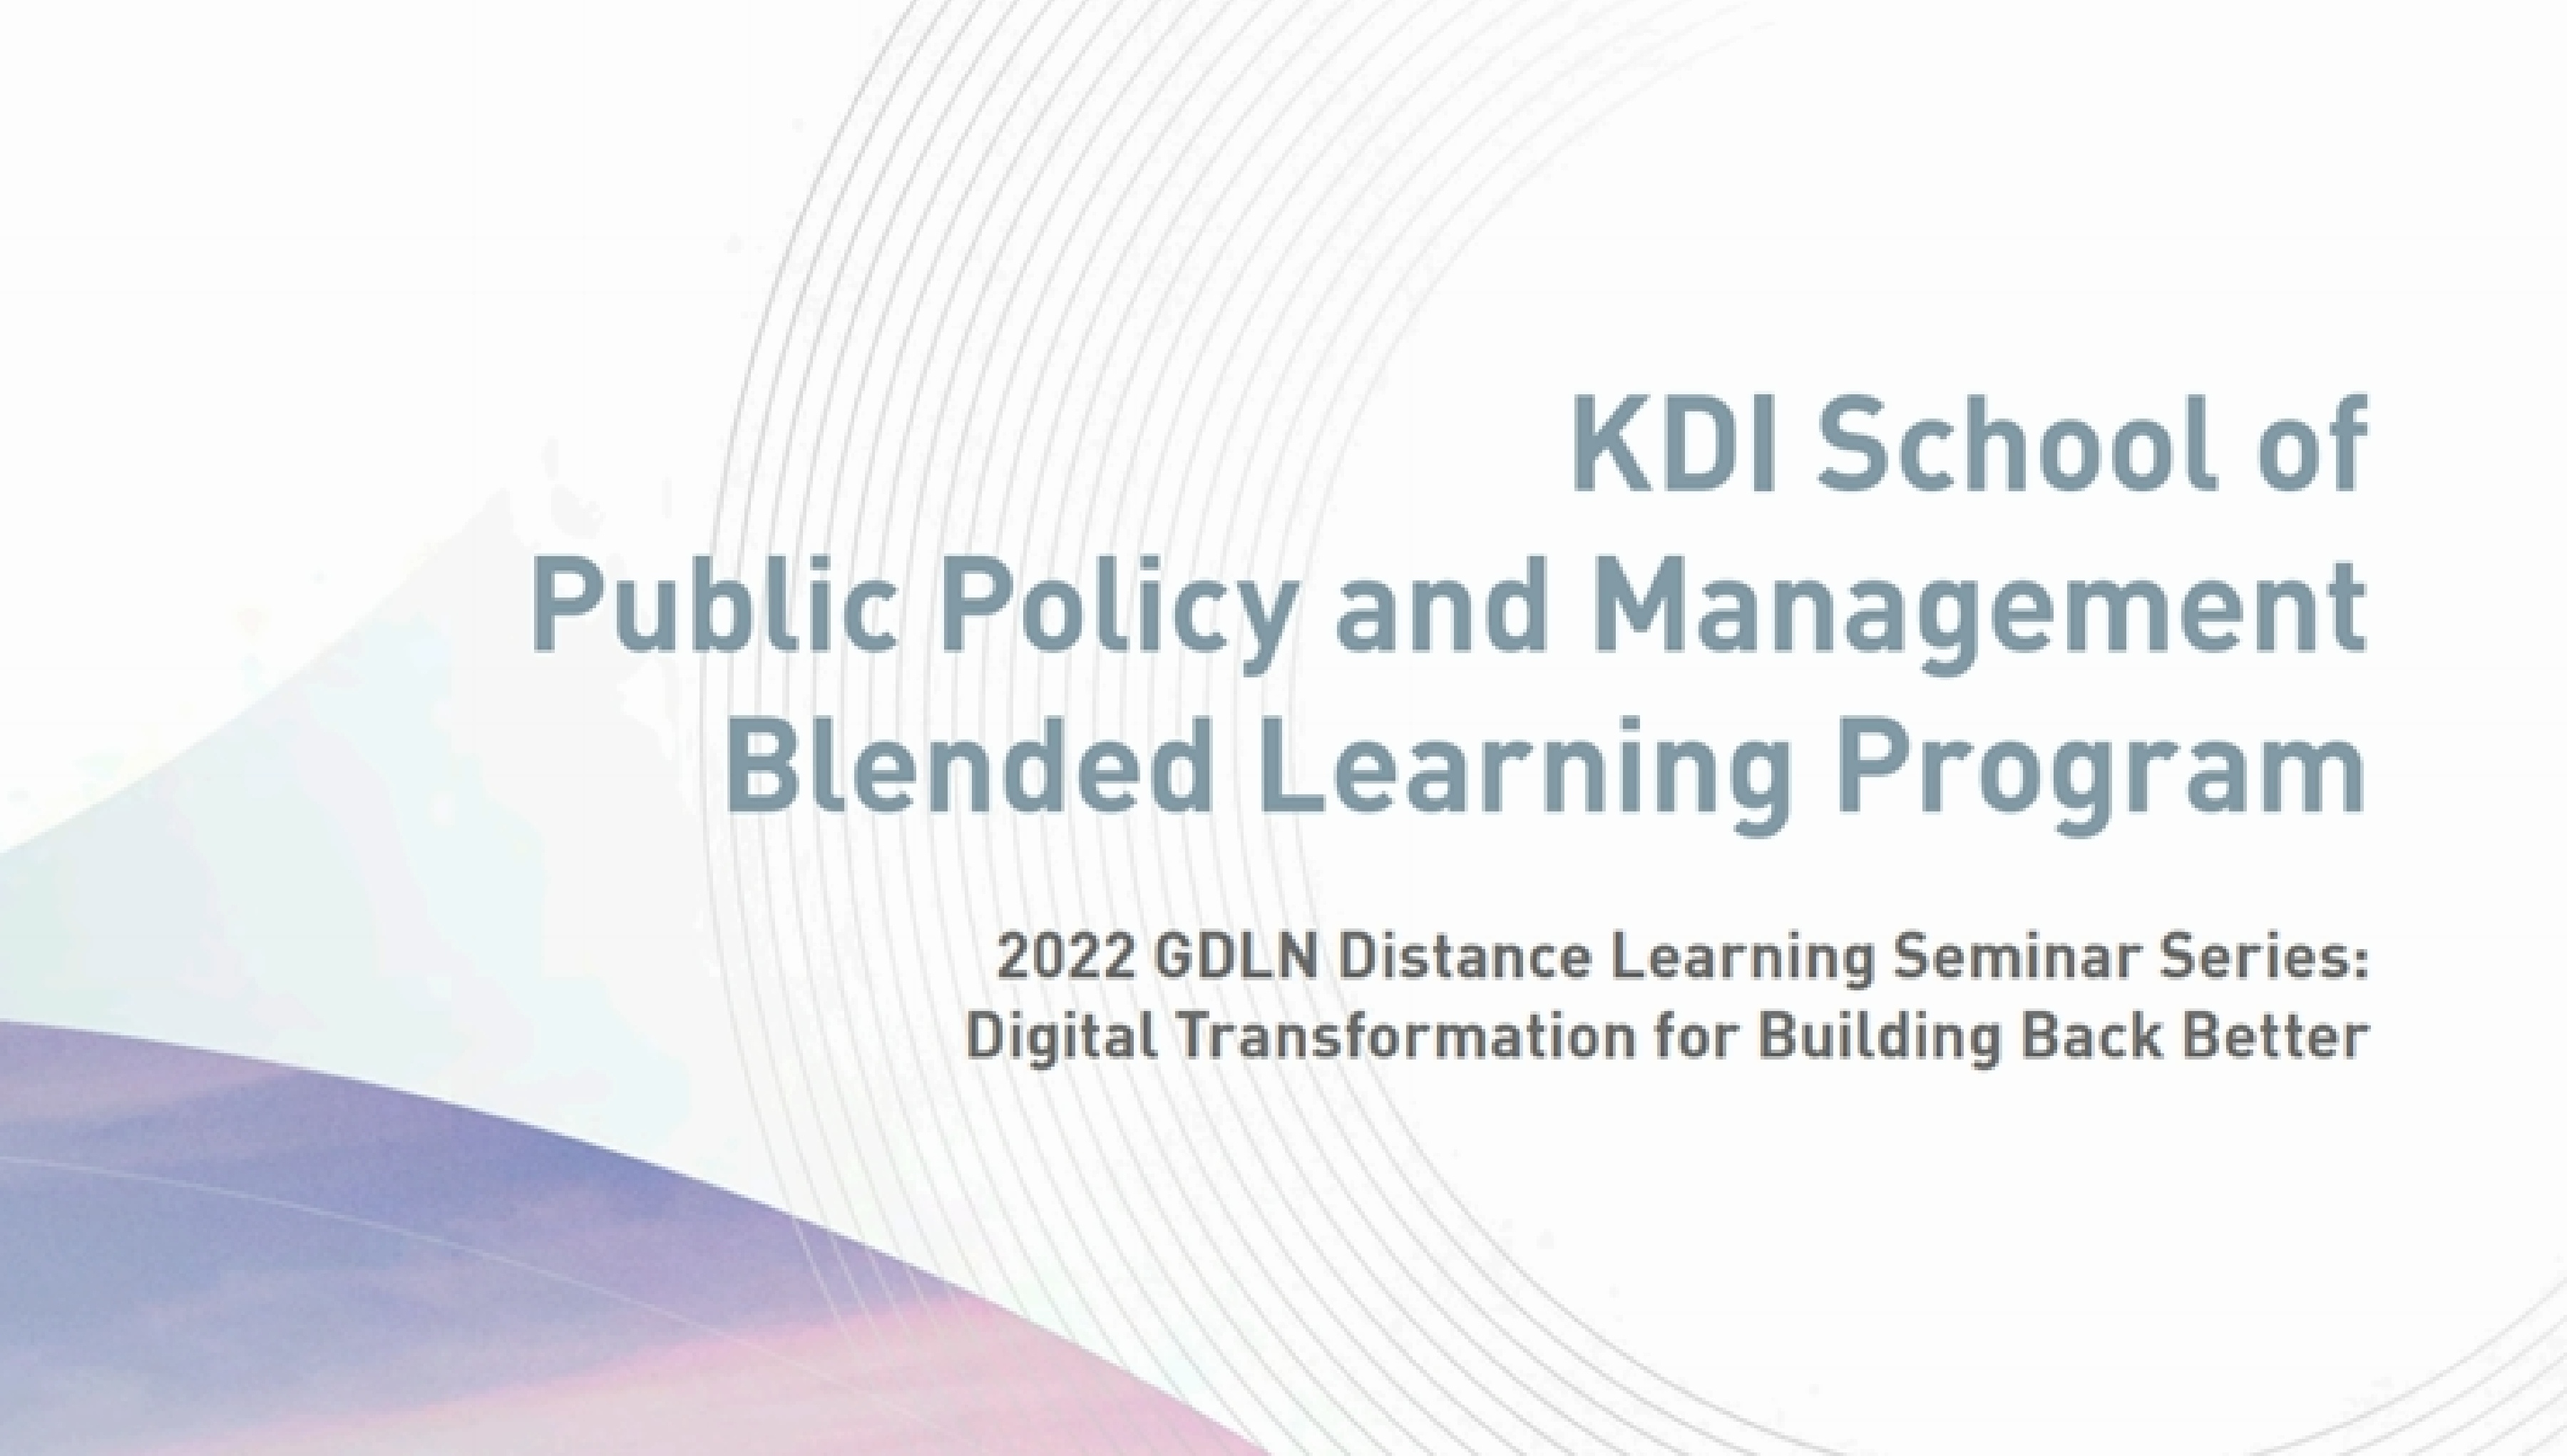 2022 GDLN Distance Learning Seminar Series: Digital Transformation for Building Back Better